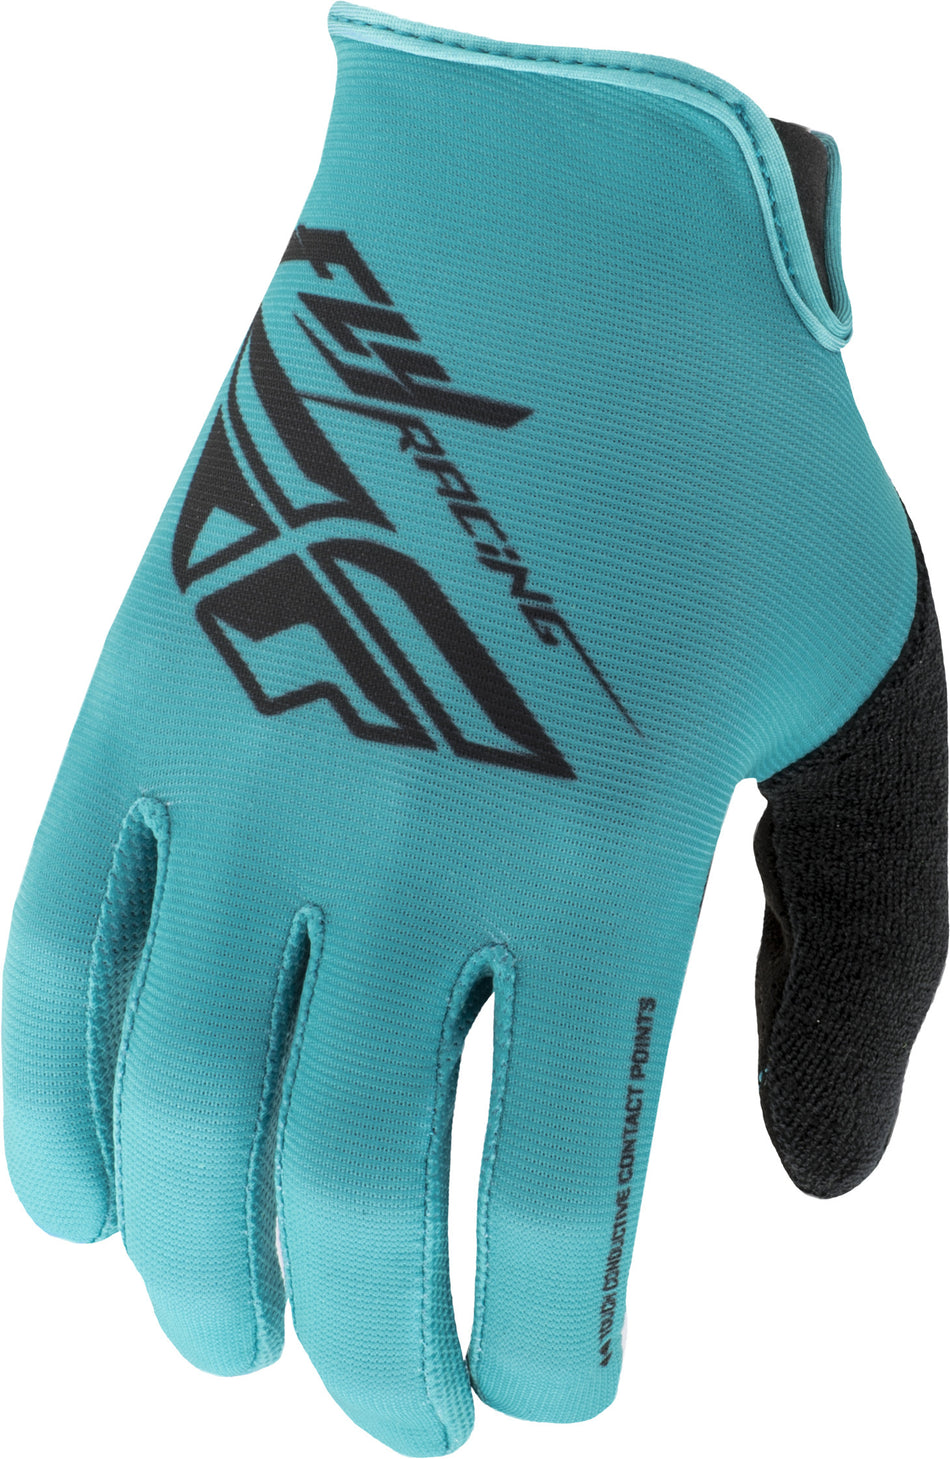 FLY RACING Media Gloves Teal/Black Sz 11 350-09711